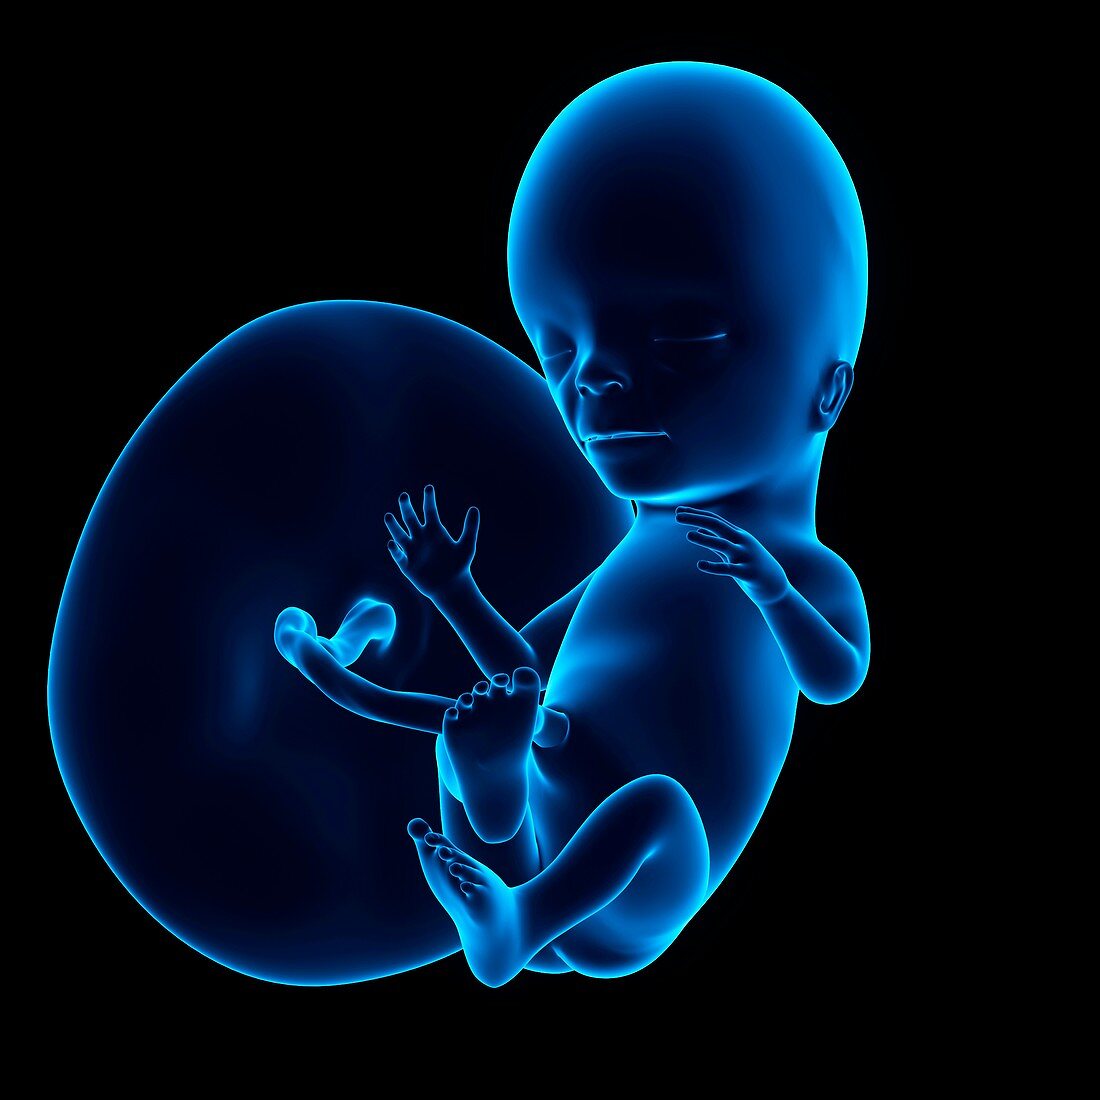 Human fetus age 15 weeks